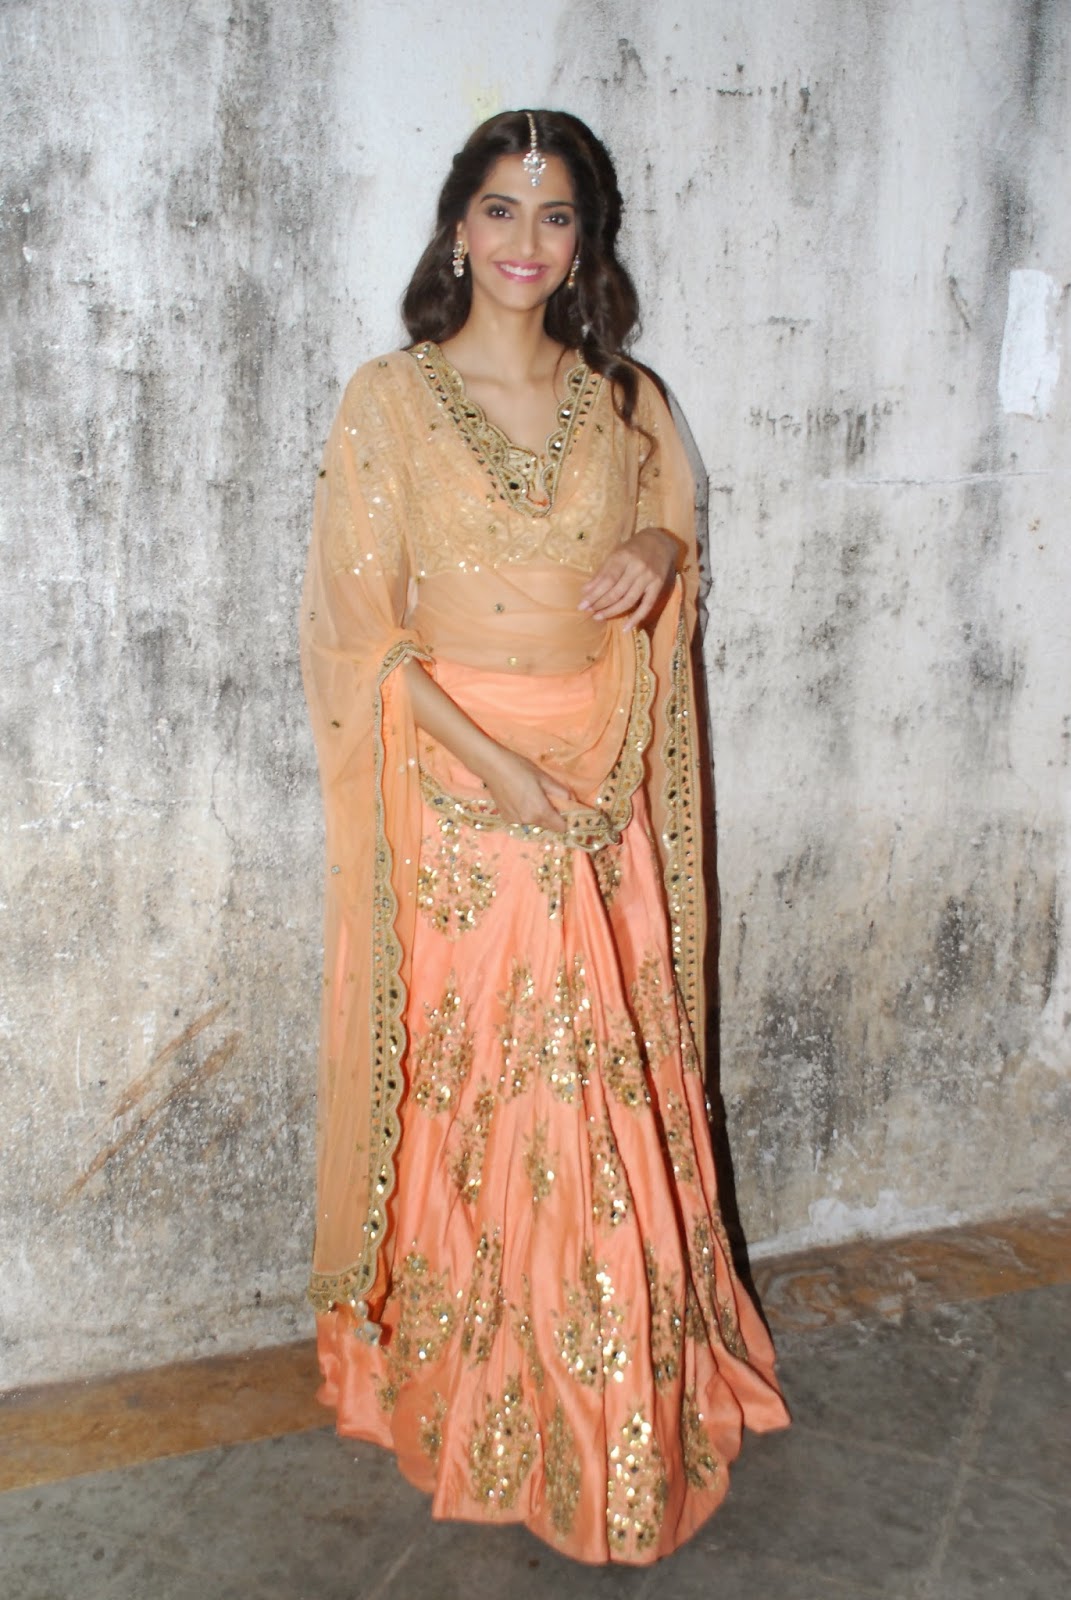 Bollywood Hot Actress Sonam Kapoor Long Hair In Transparent Orange Ghagra Choli